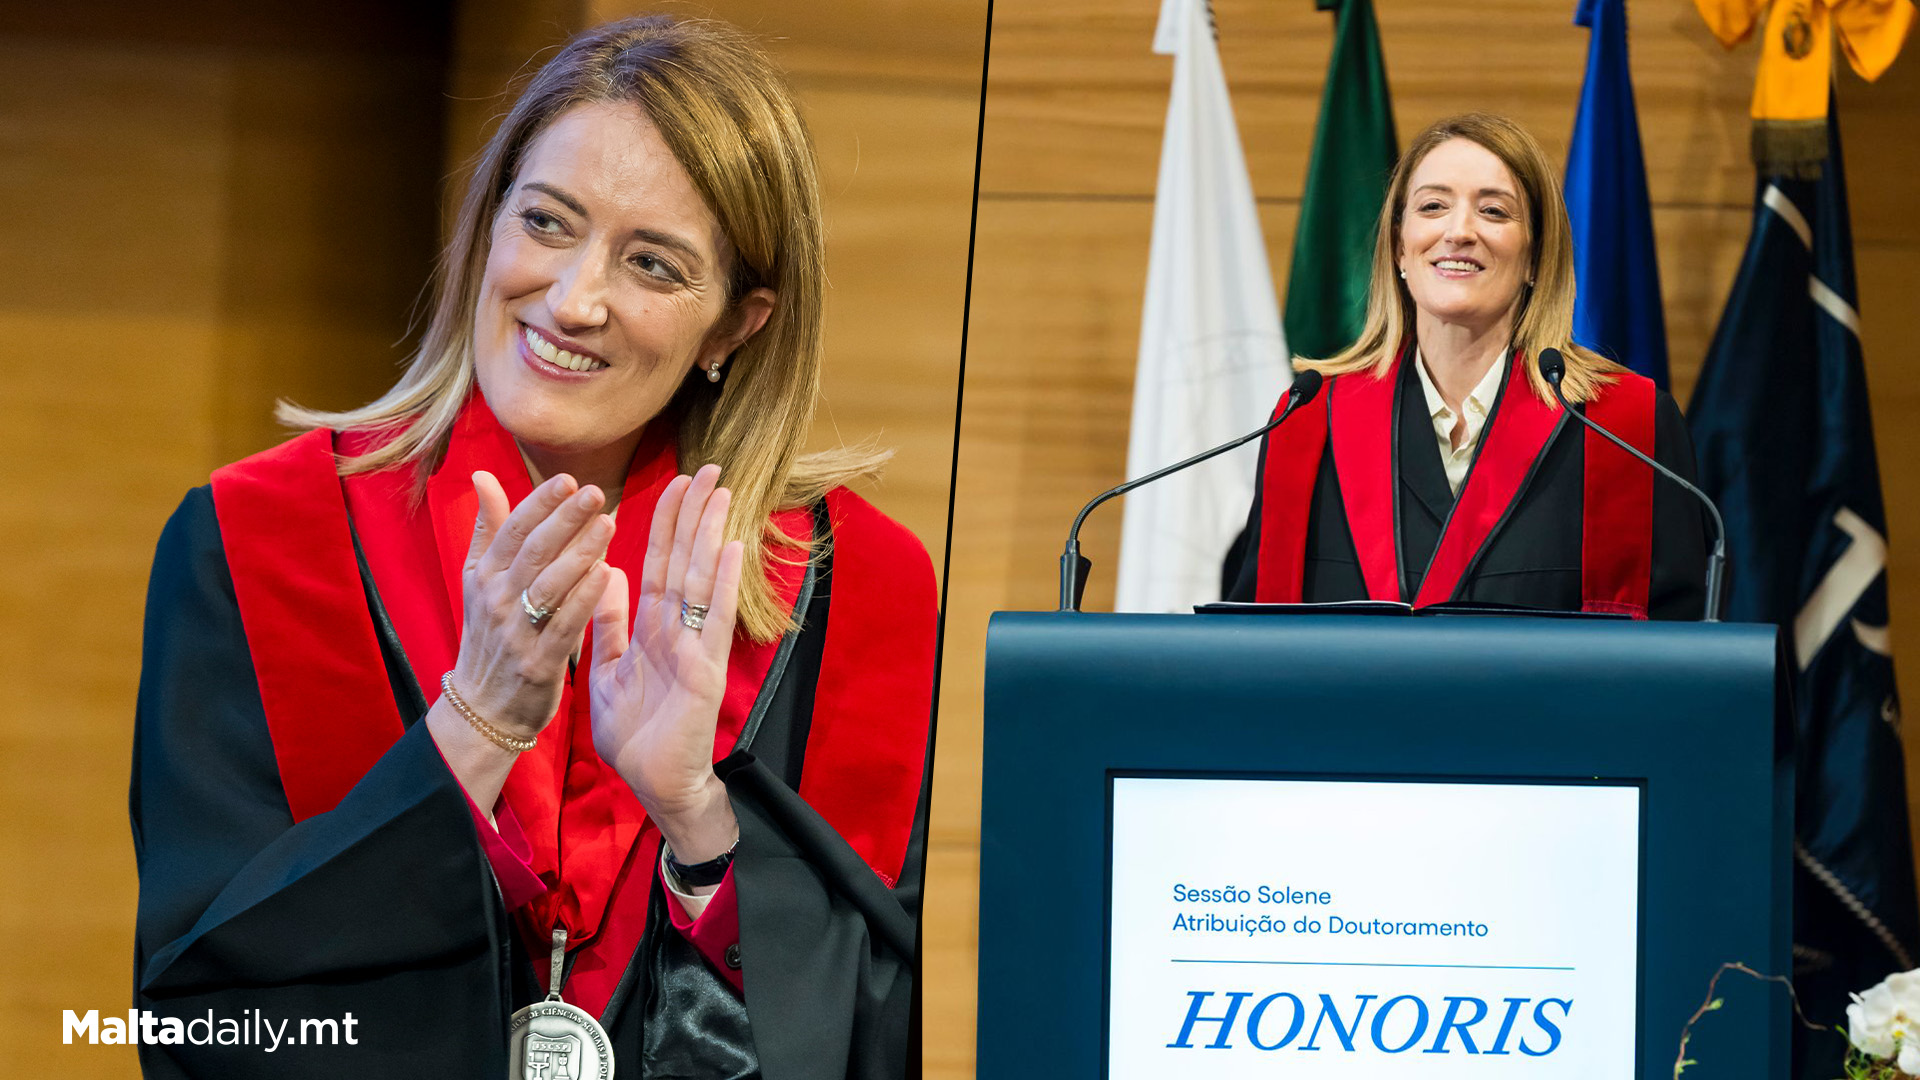 President Metsola Awarded Honoris Causa Doctorate From University Of Lisbon